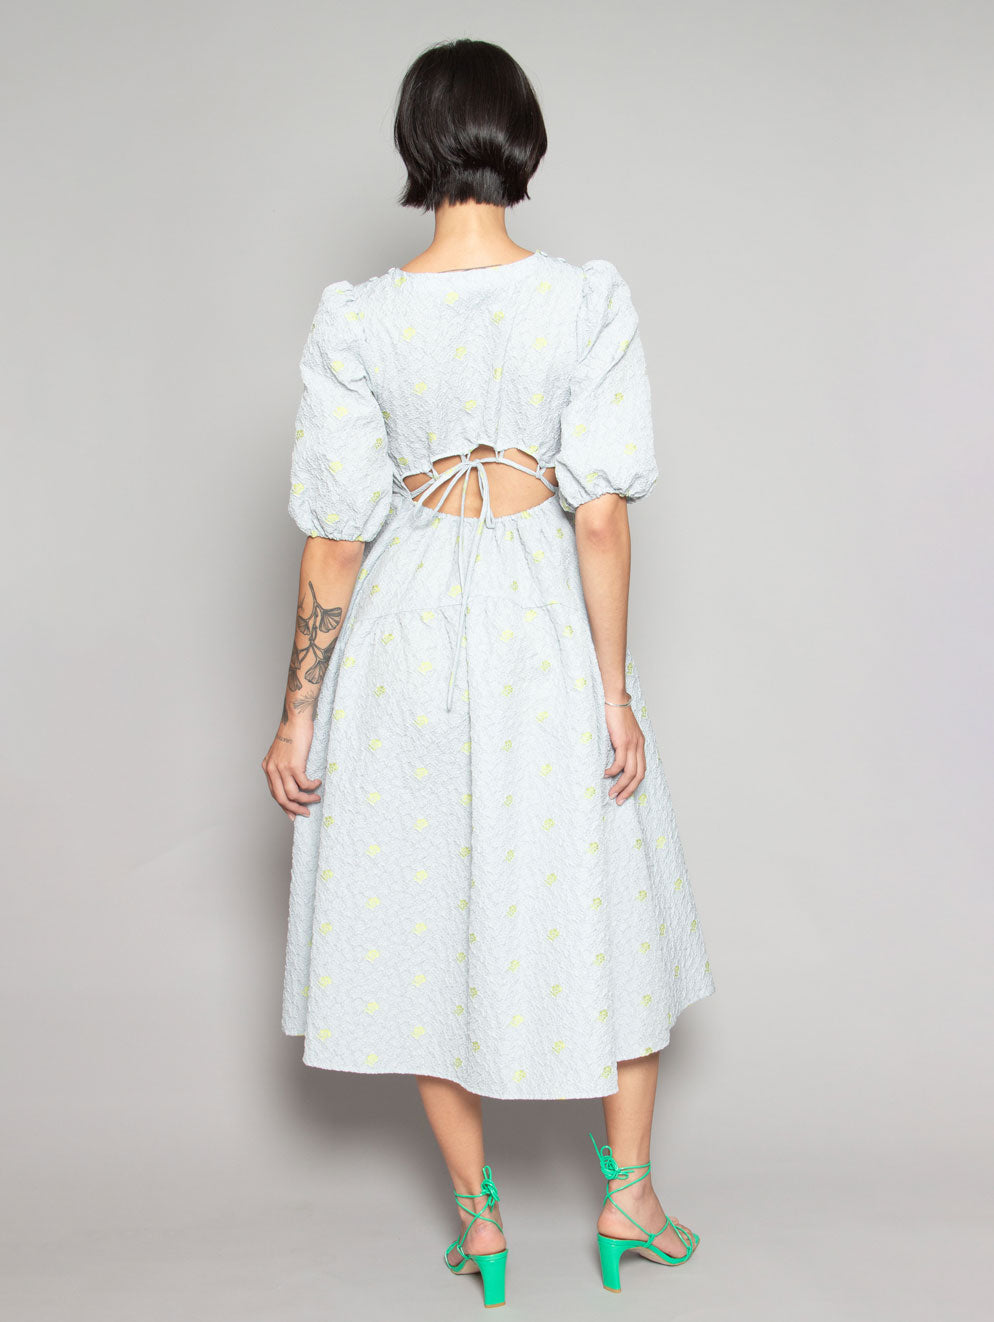 BEATRICE.B Embossed Jacquard Midi Dress in Zen Mist available at Lahn.shop